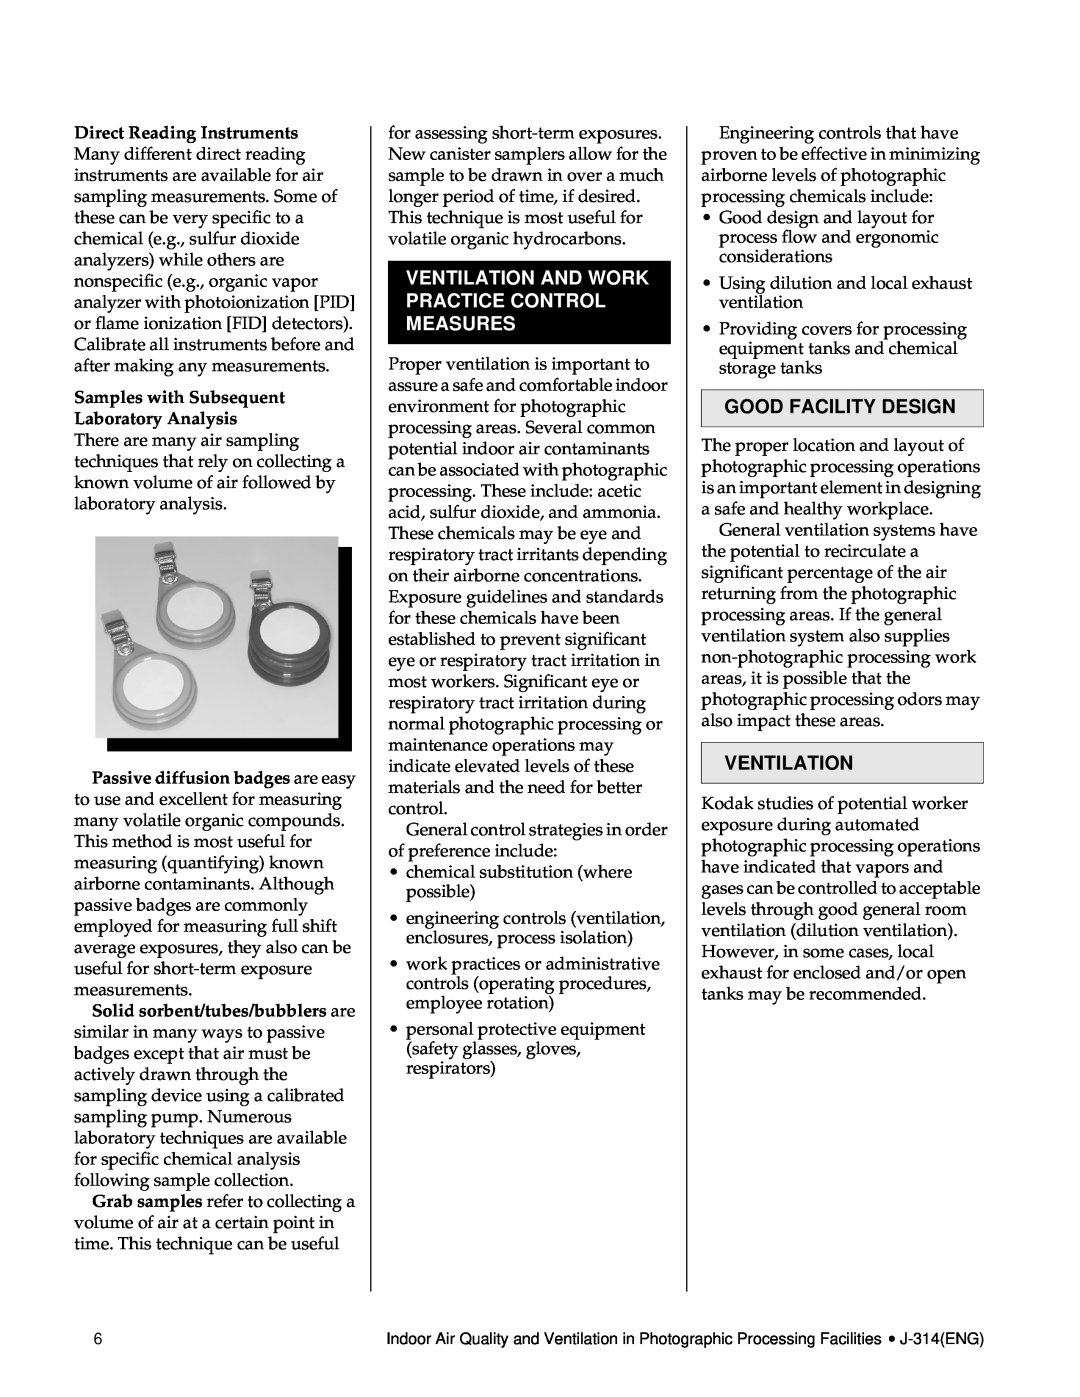 Kodak J-314 manual Ventilation And Work Practice Control Measures, Good Facility Design 